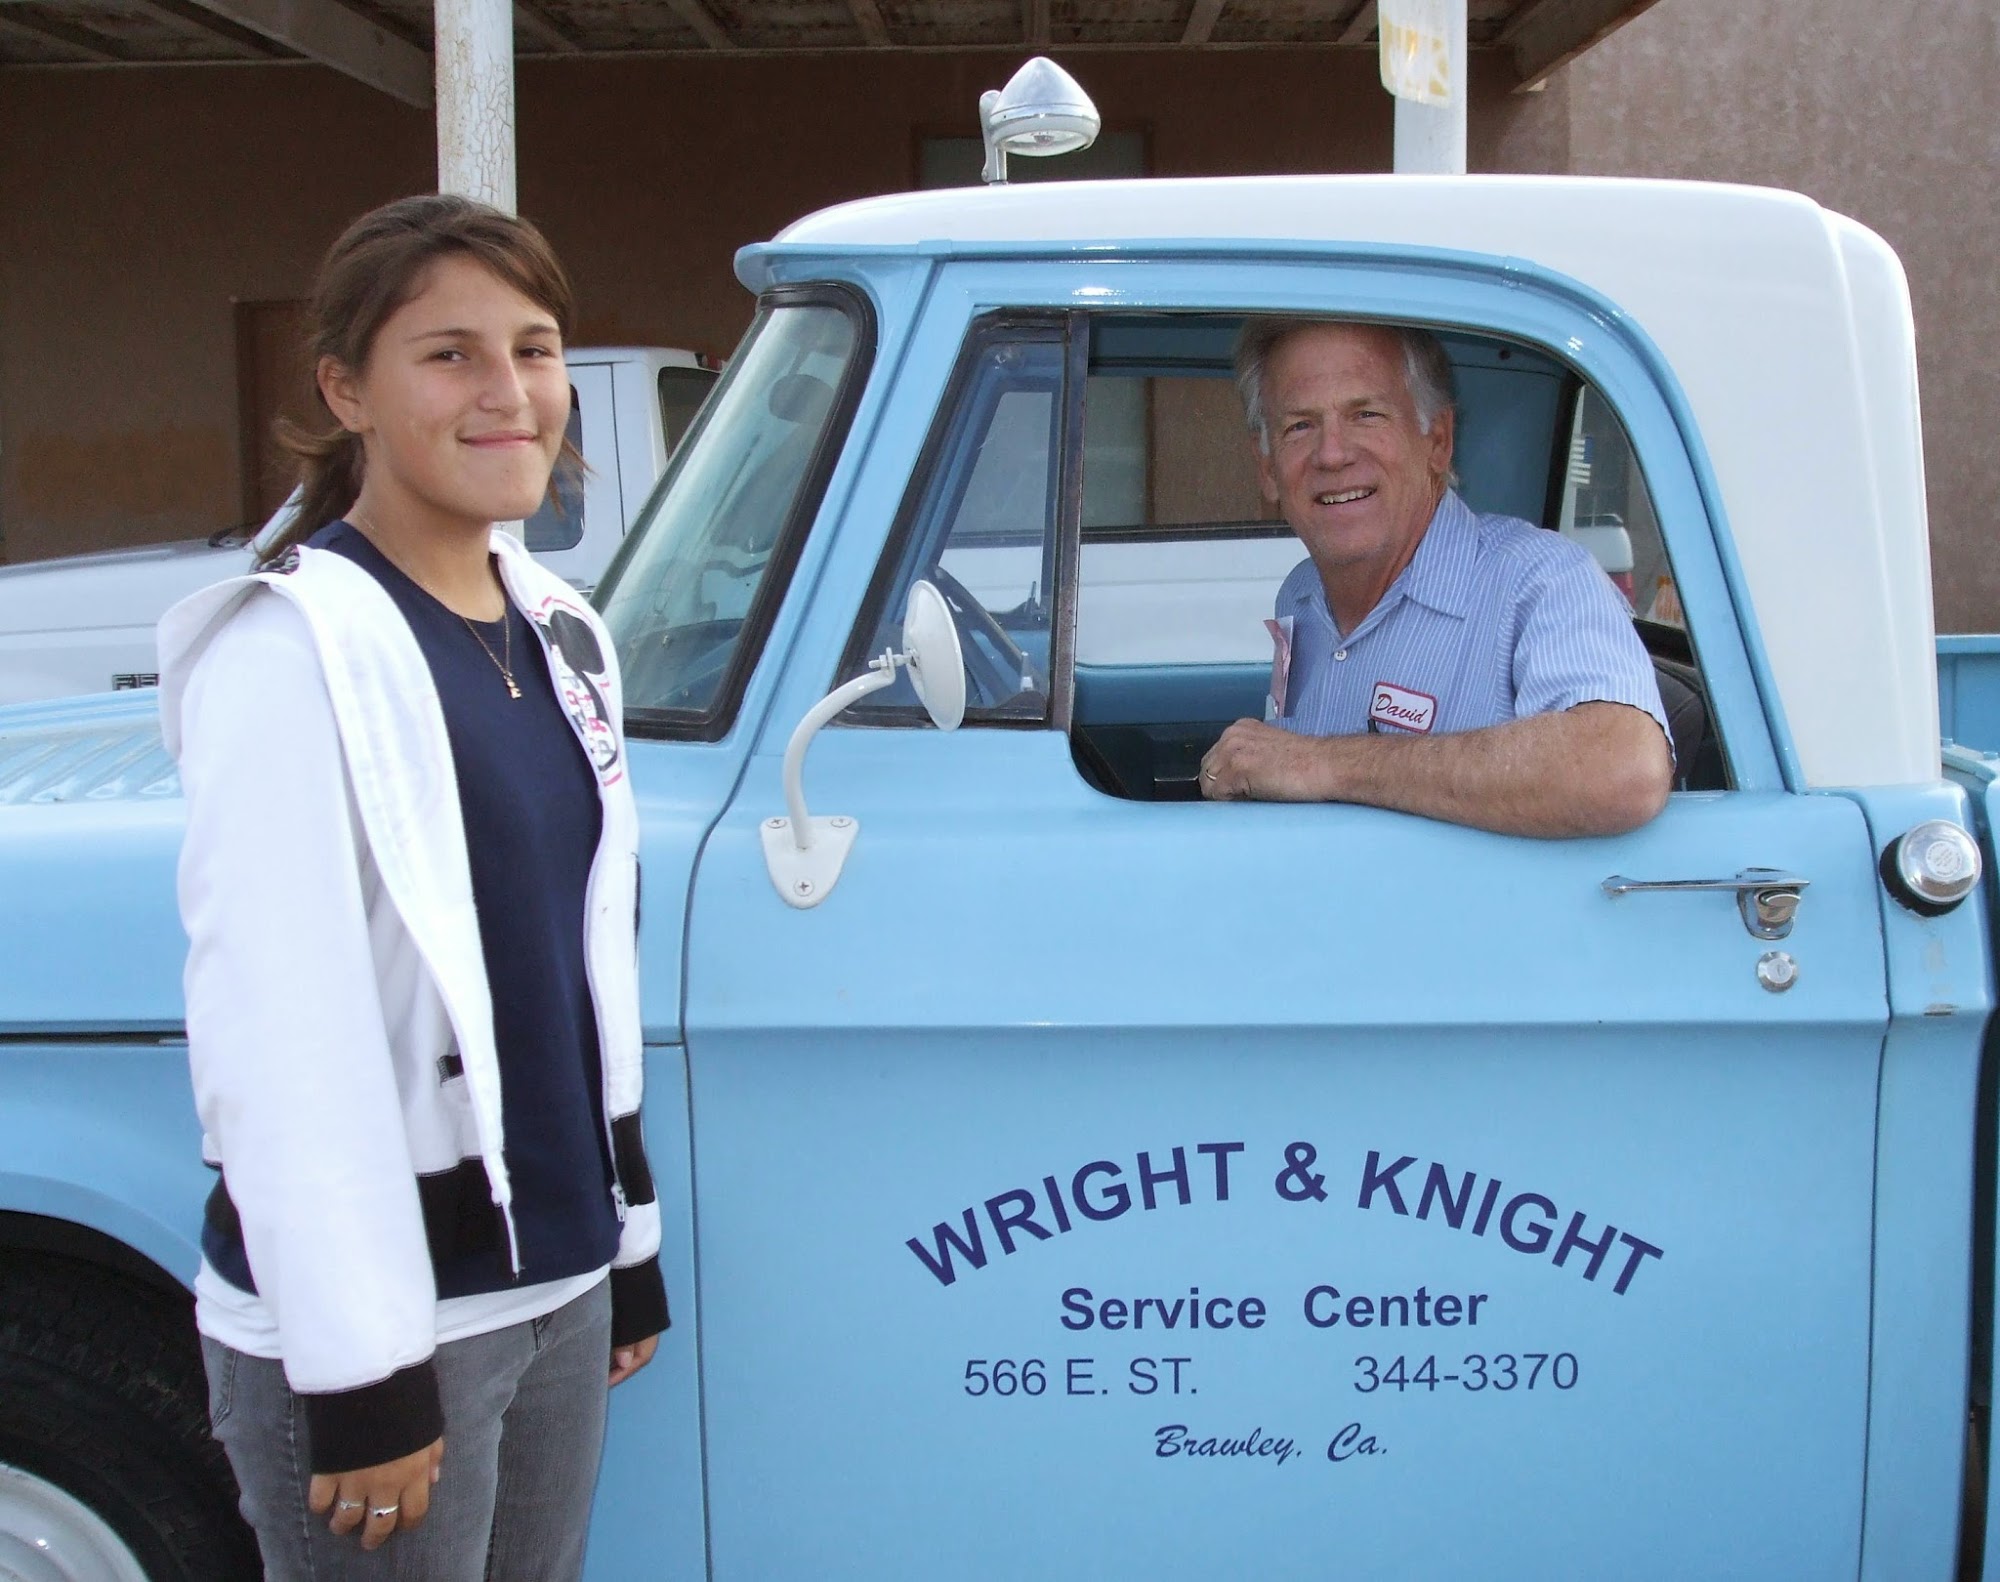 Wright & Knight Service Center, Inc